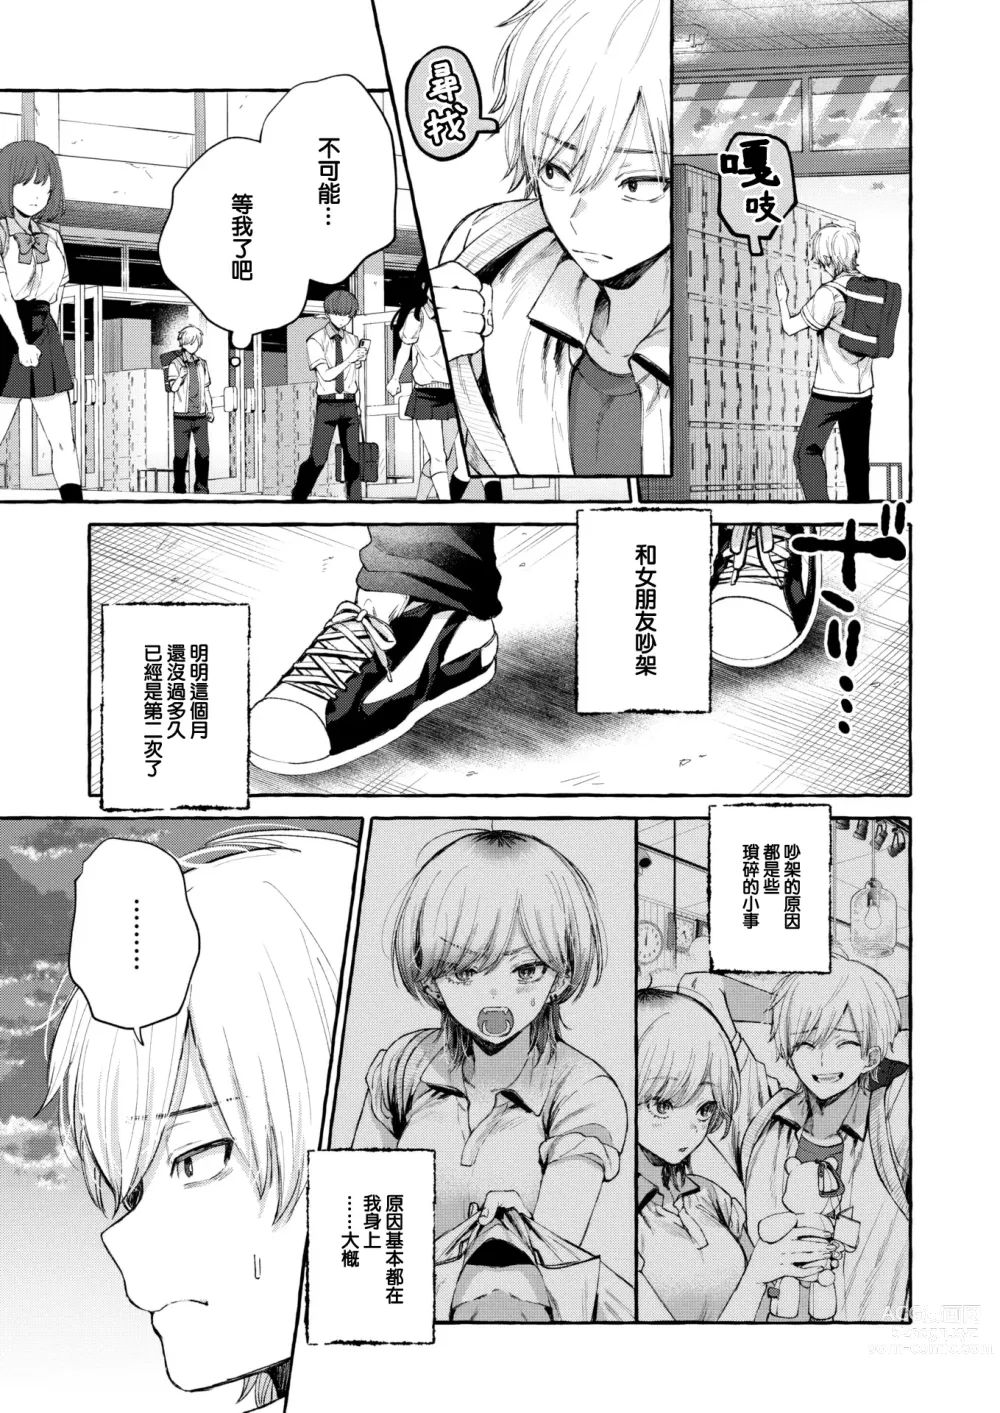 Page 4 of manga Kitto Shiranai